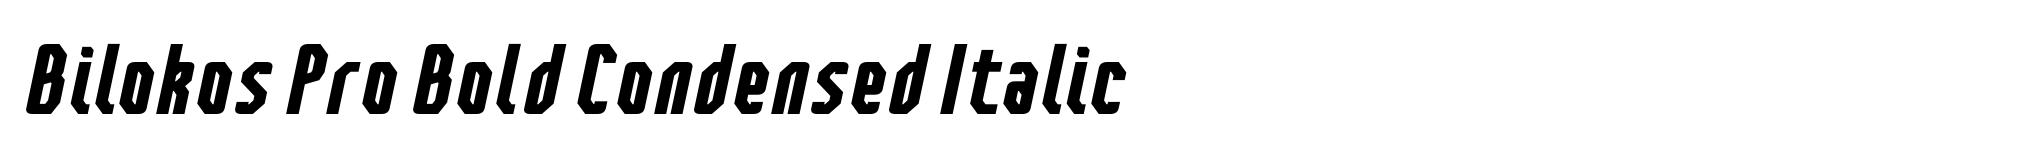 Bilokos Pro Bold Condensed Italic image